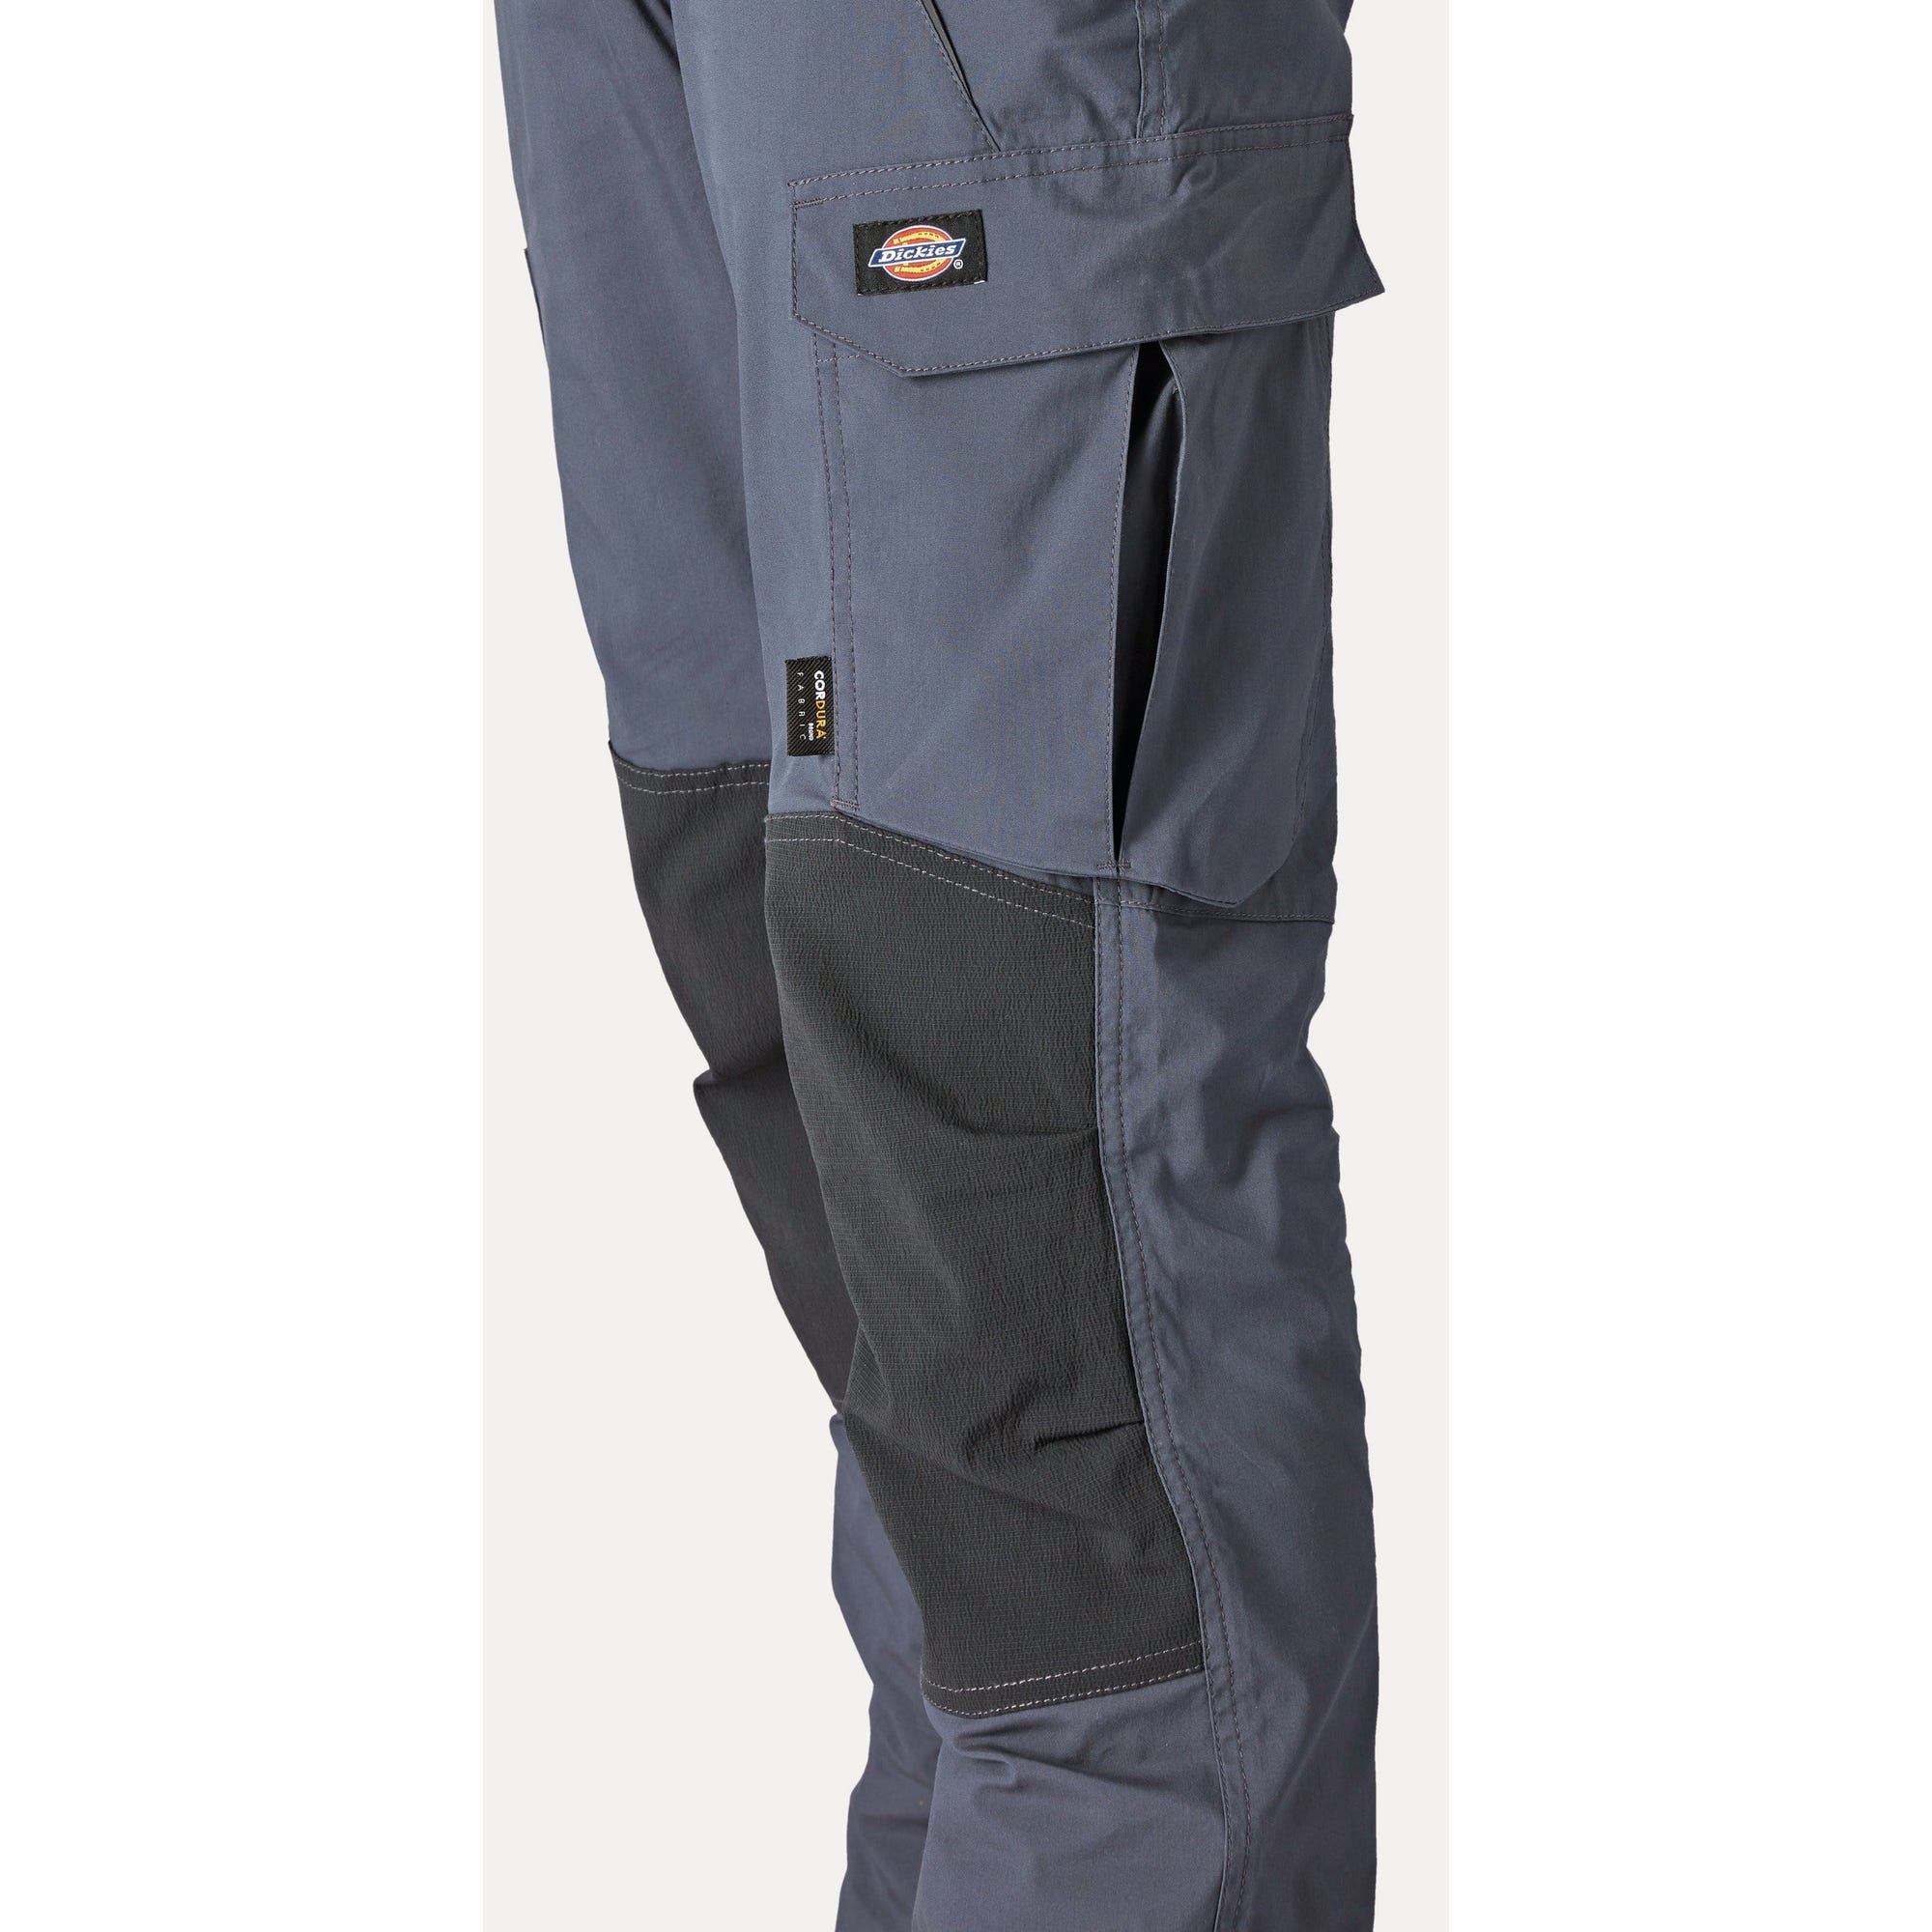 Pantalon léger Flex Noir - Dickies - Taille 52 8